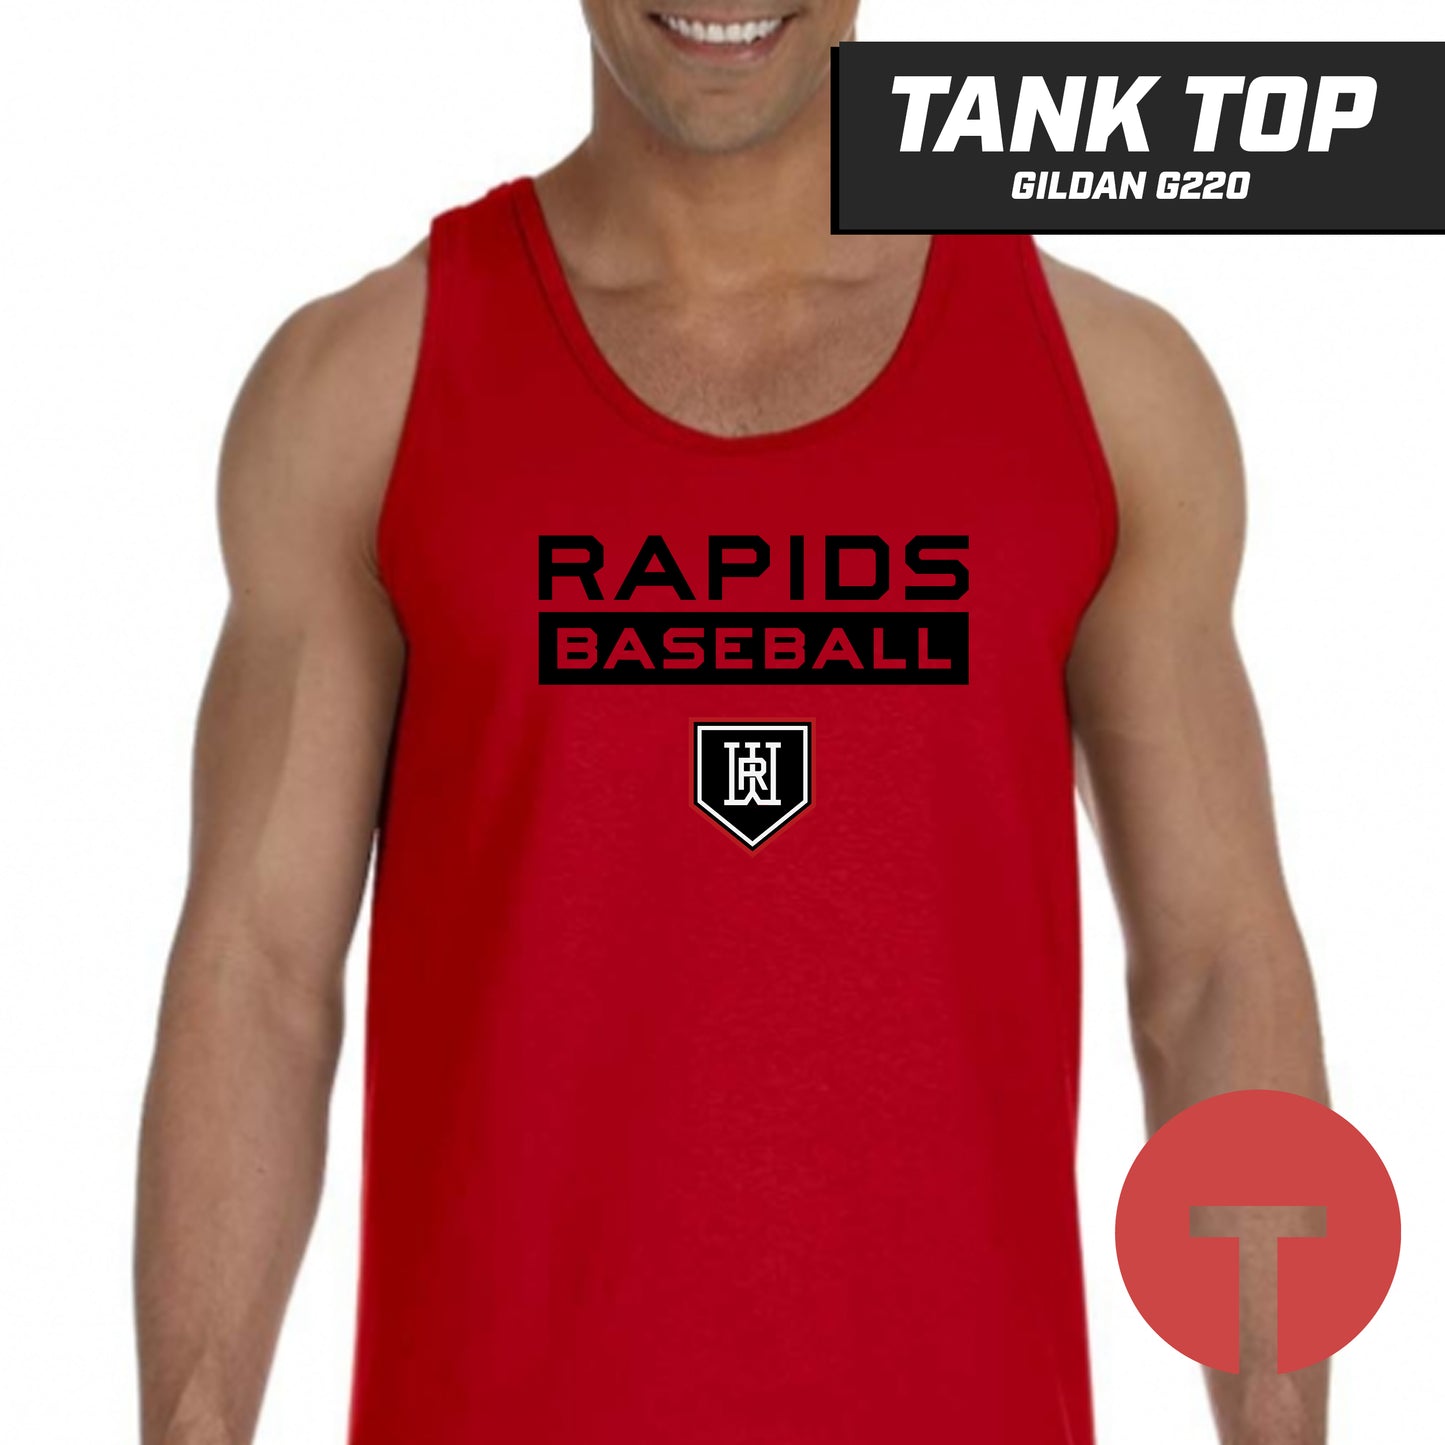 Rapids Baseball - Tank Top Gildan G220 - LOGO 4